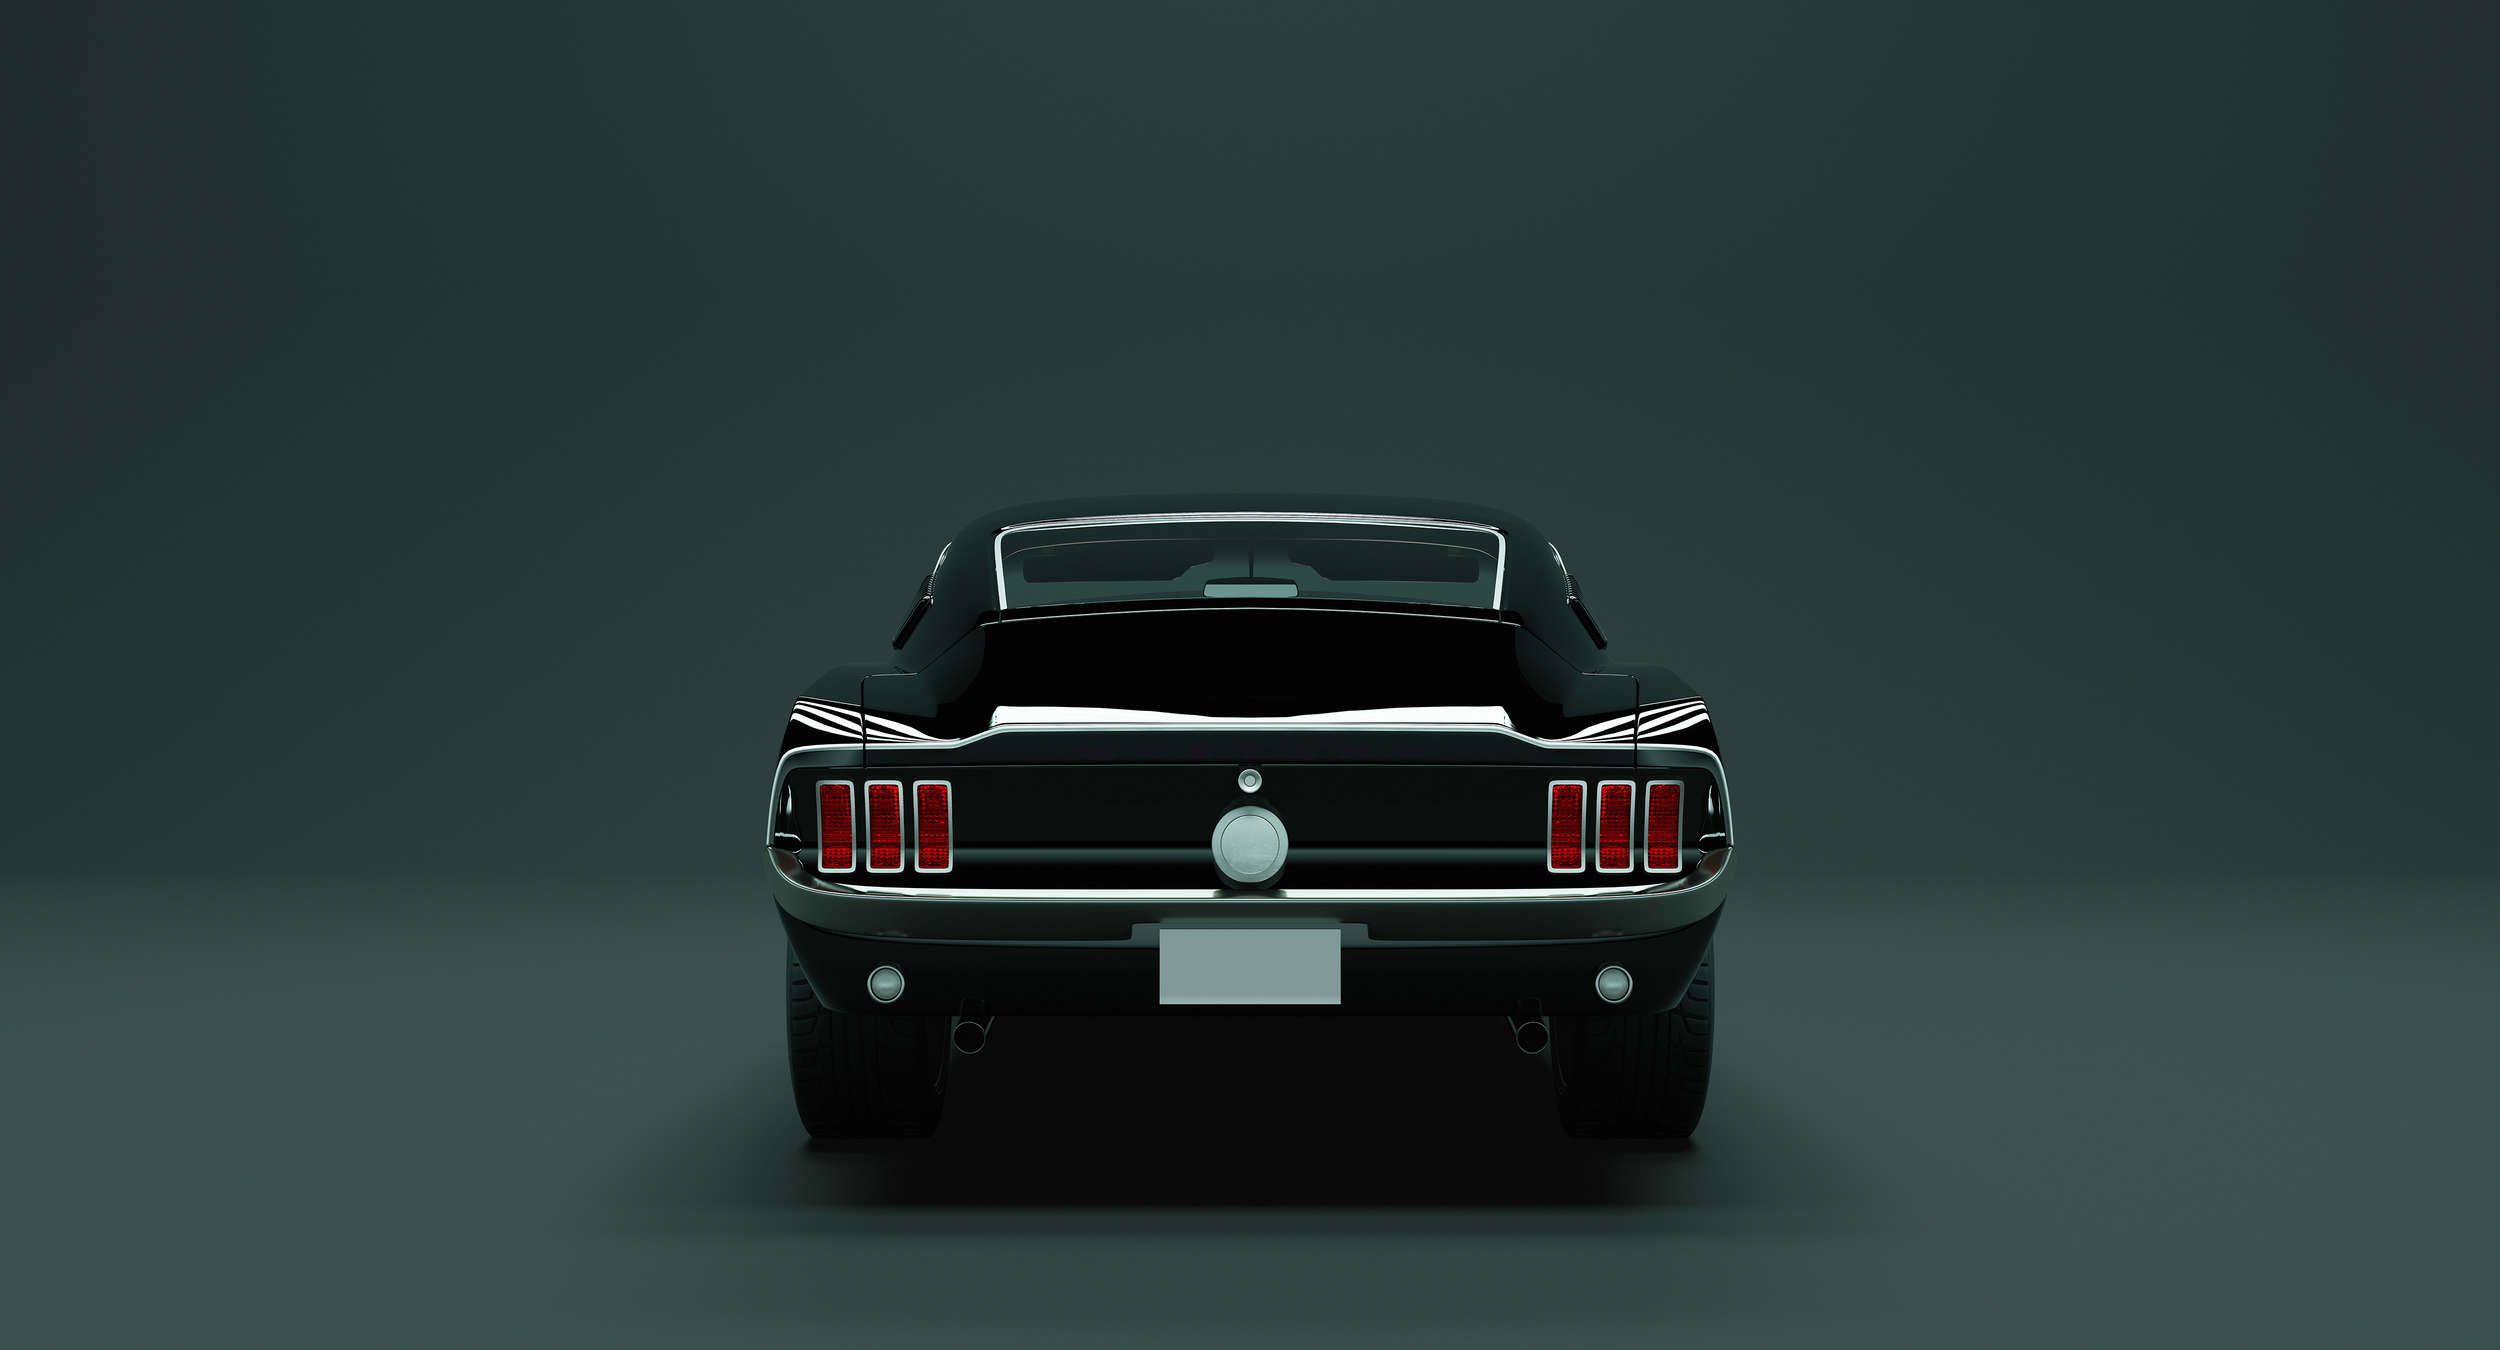             Papel pintado Mustang 3 - American Muscle Car - Azul, Negro | Liso mate
        